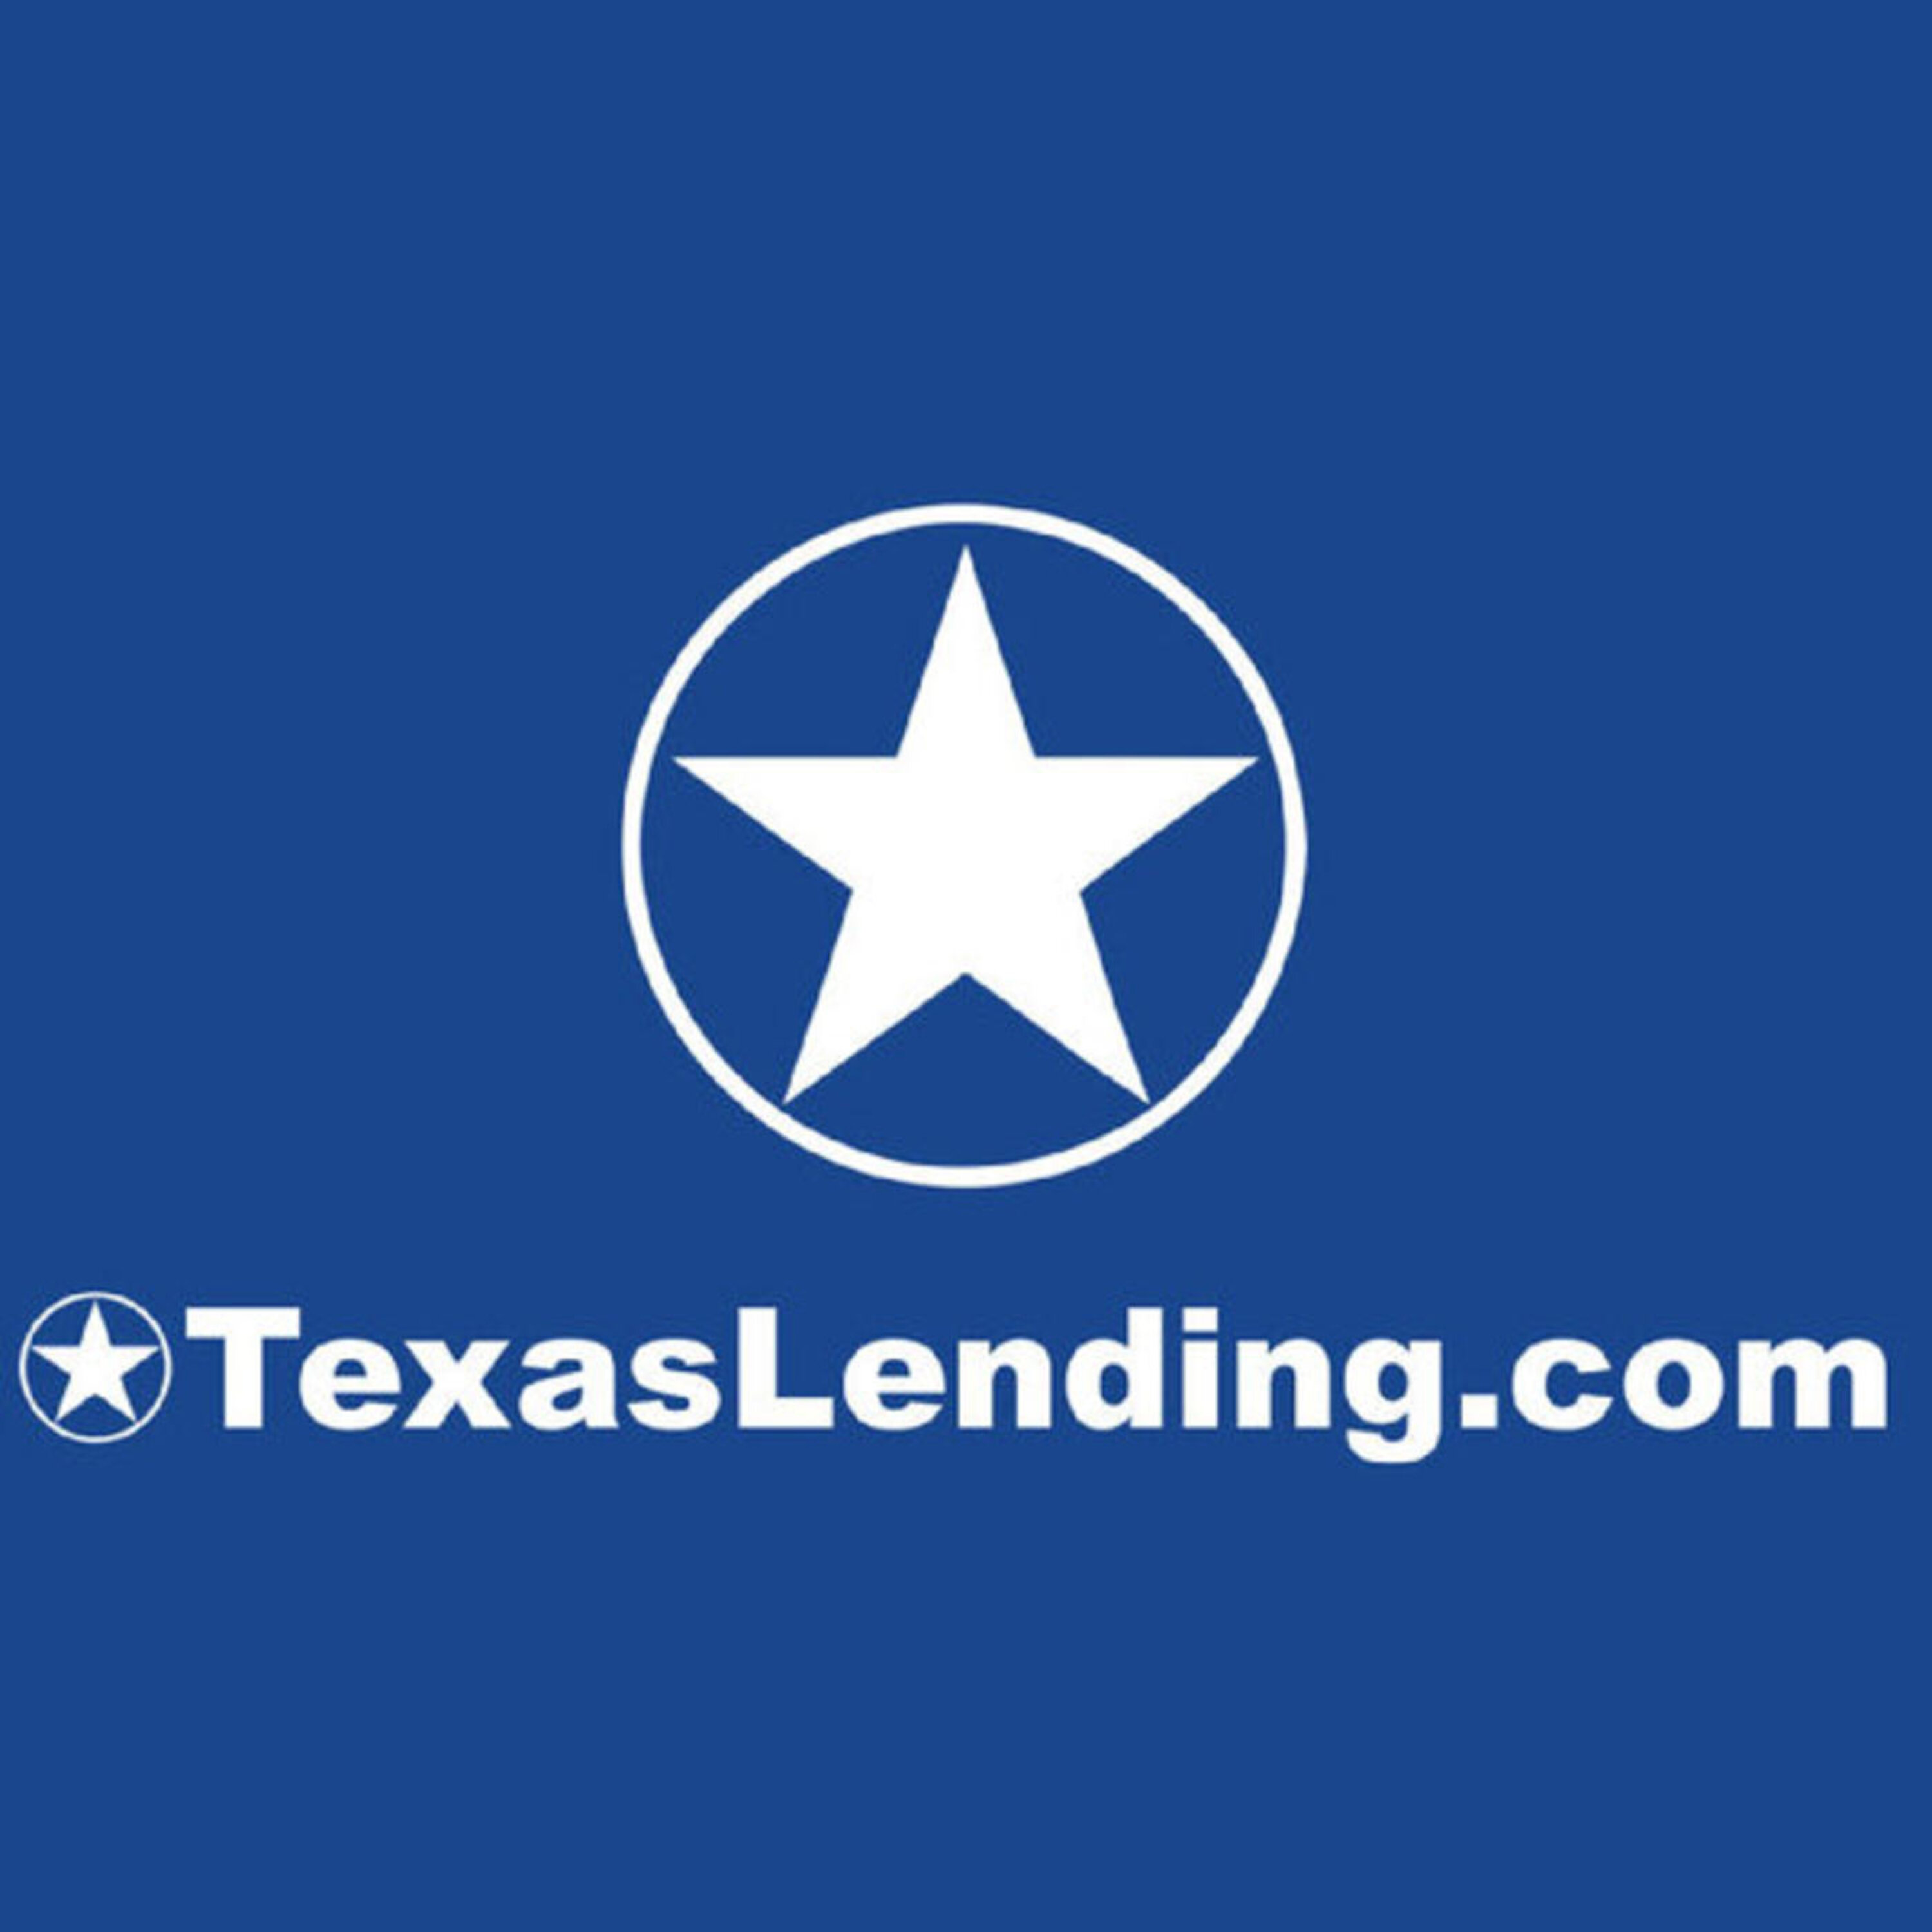 The Texas Lending Mortgage Show